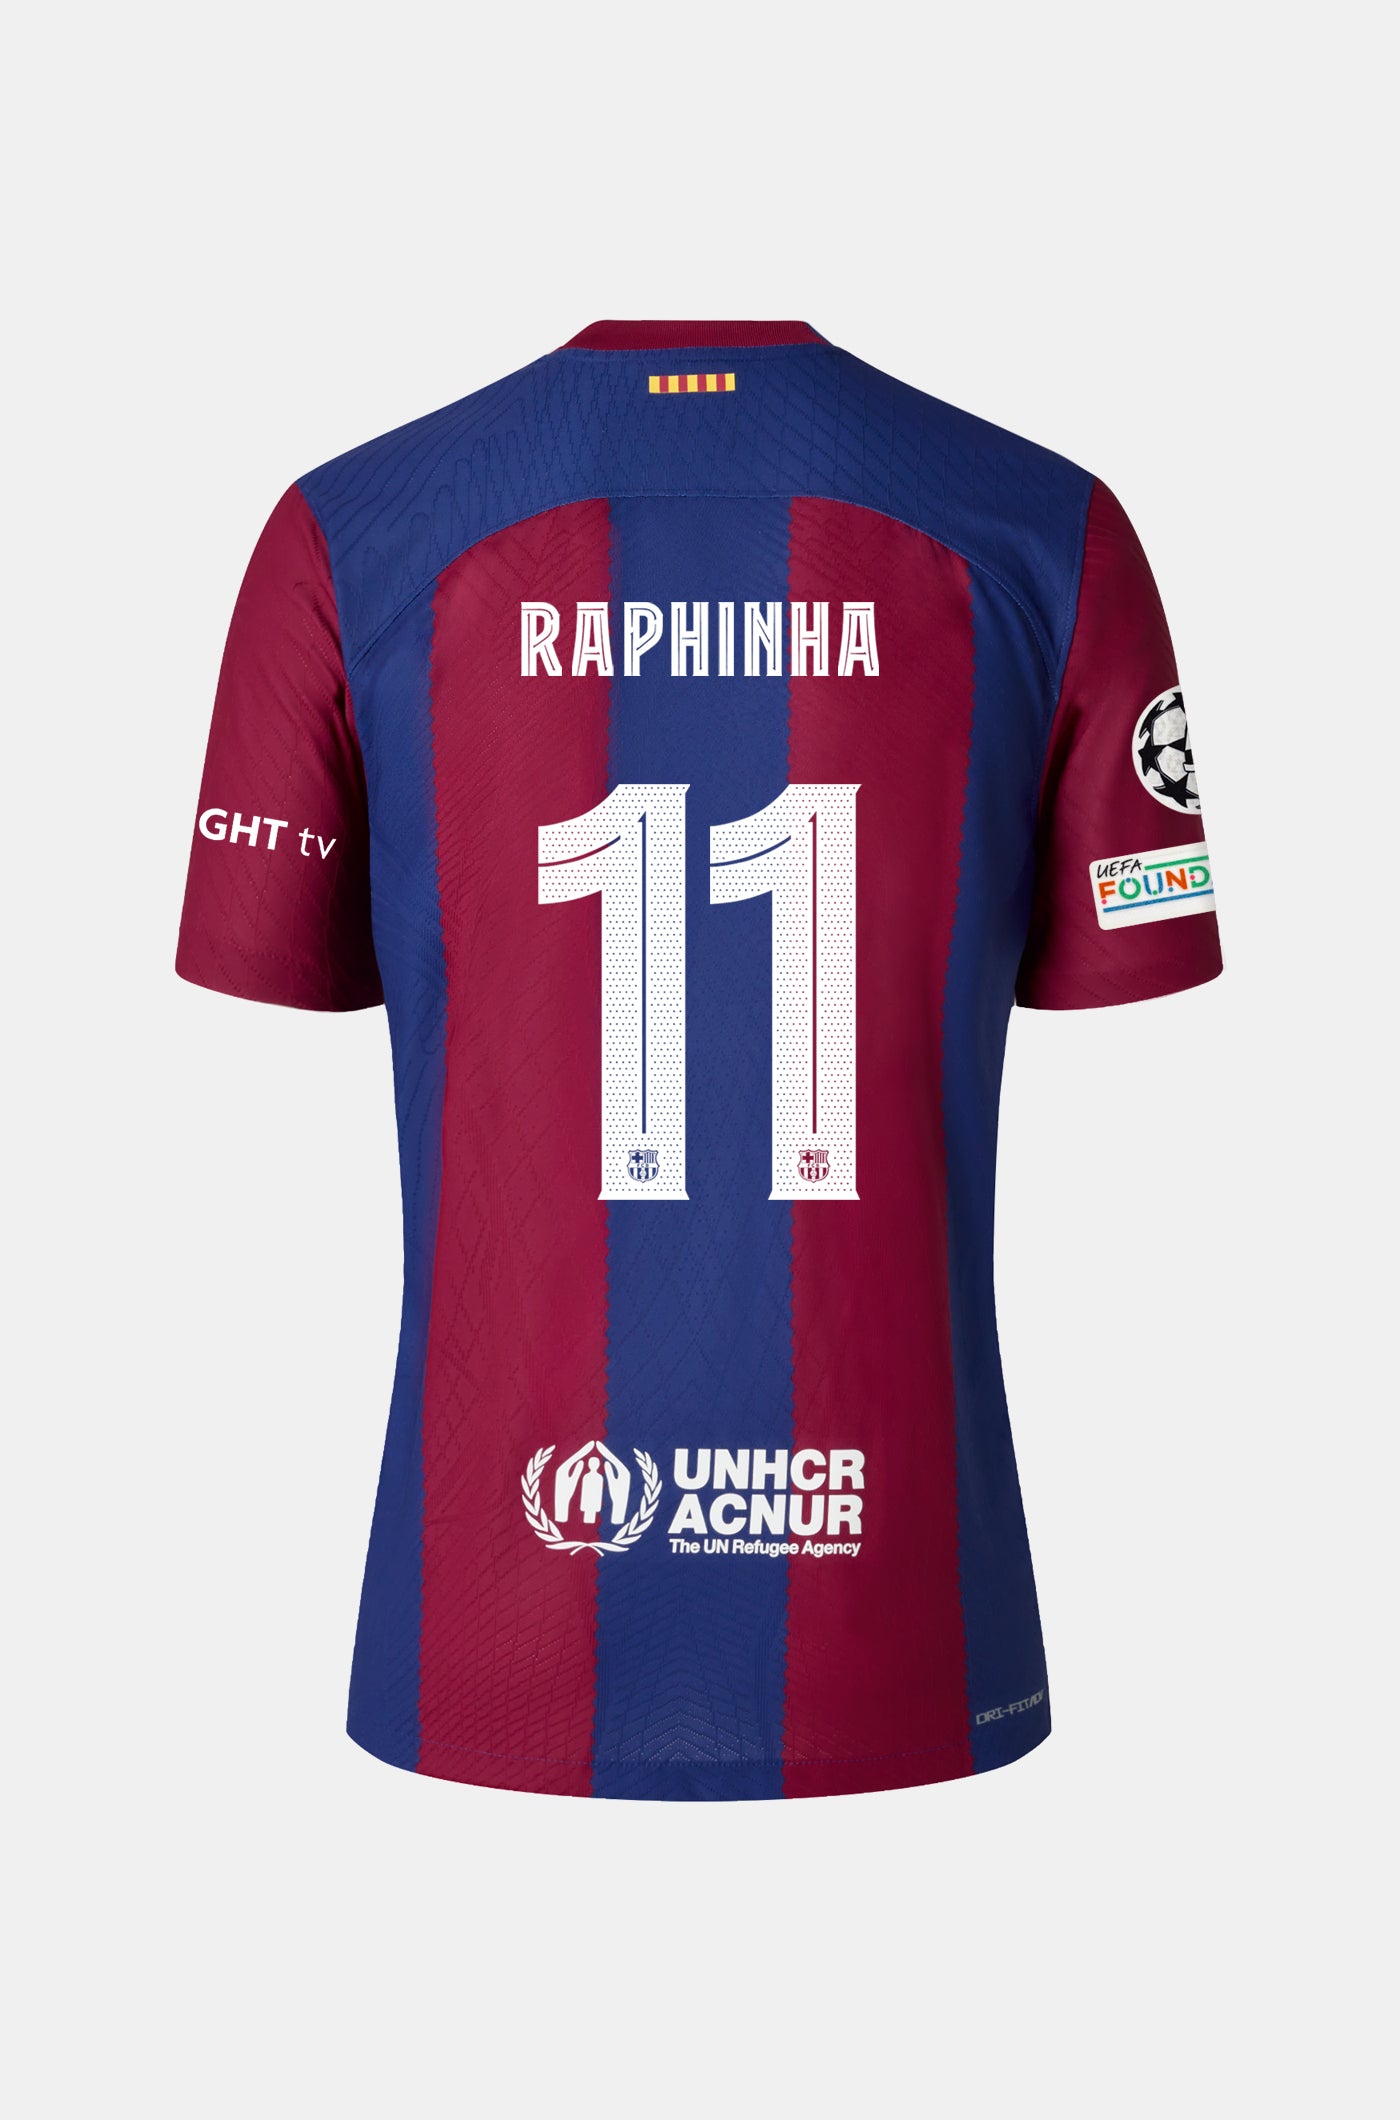 UCL FC Barcelona Home Shirt 23/24 Player's Edition - Women - RAPHINHA